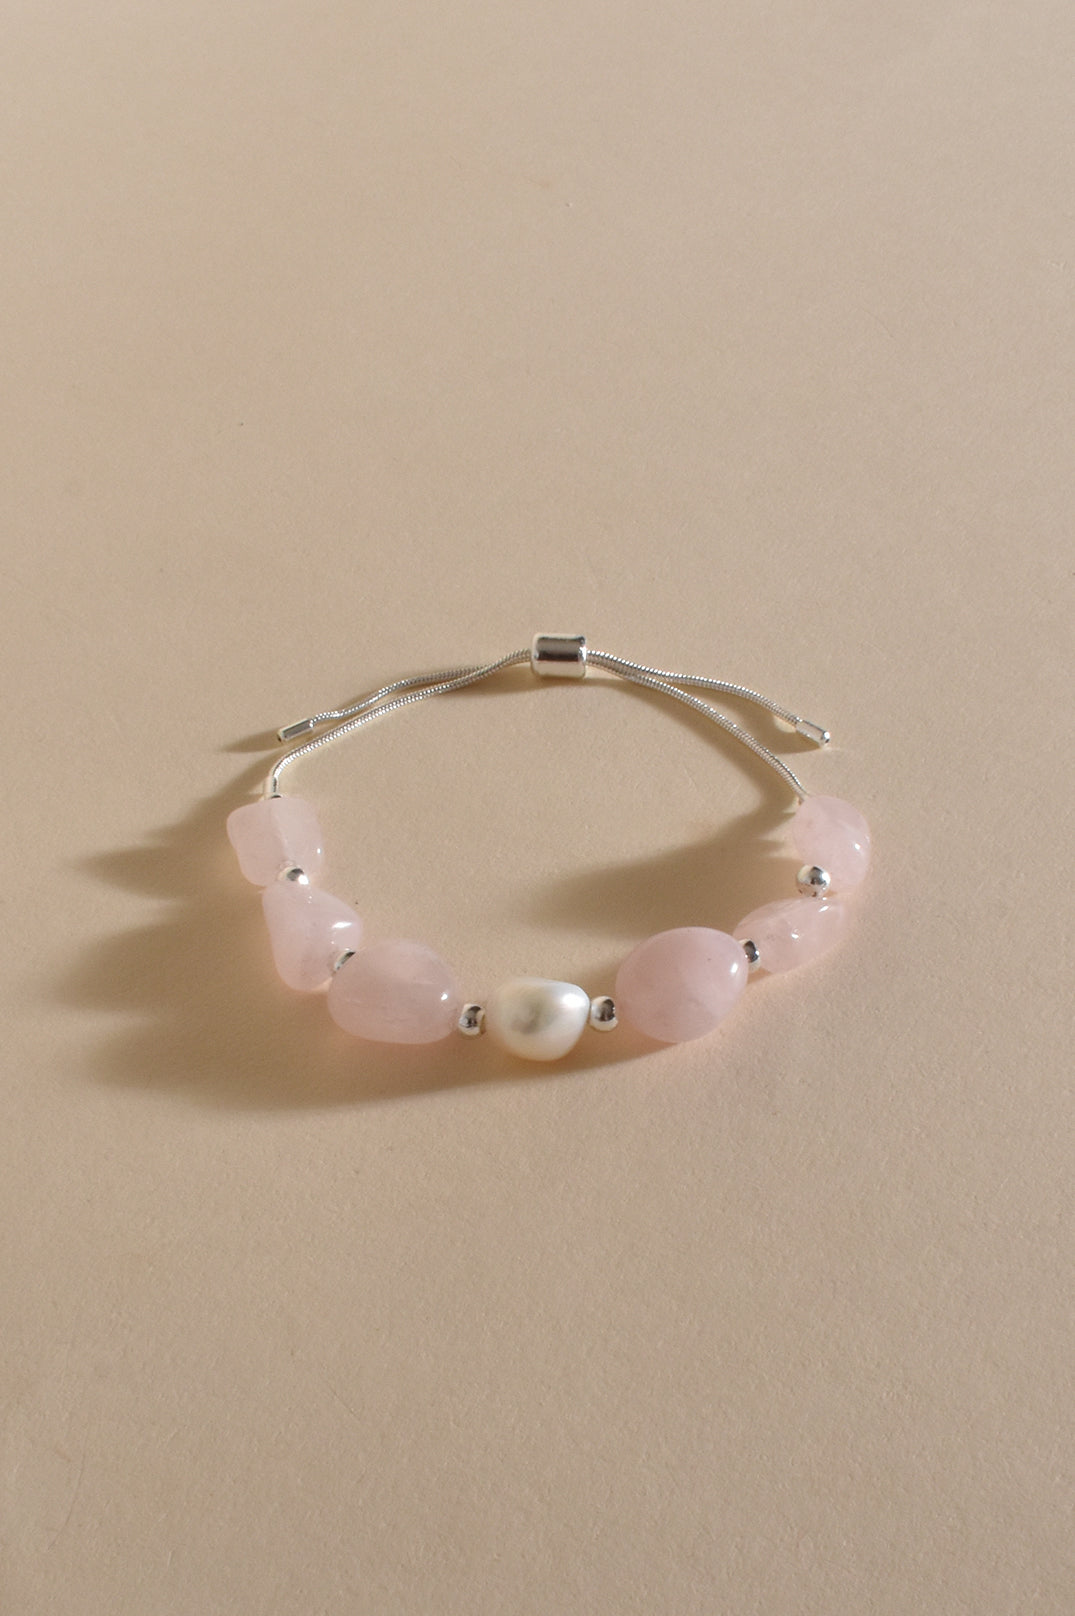 Alternate Stone and Pearl Bracelet  Pink